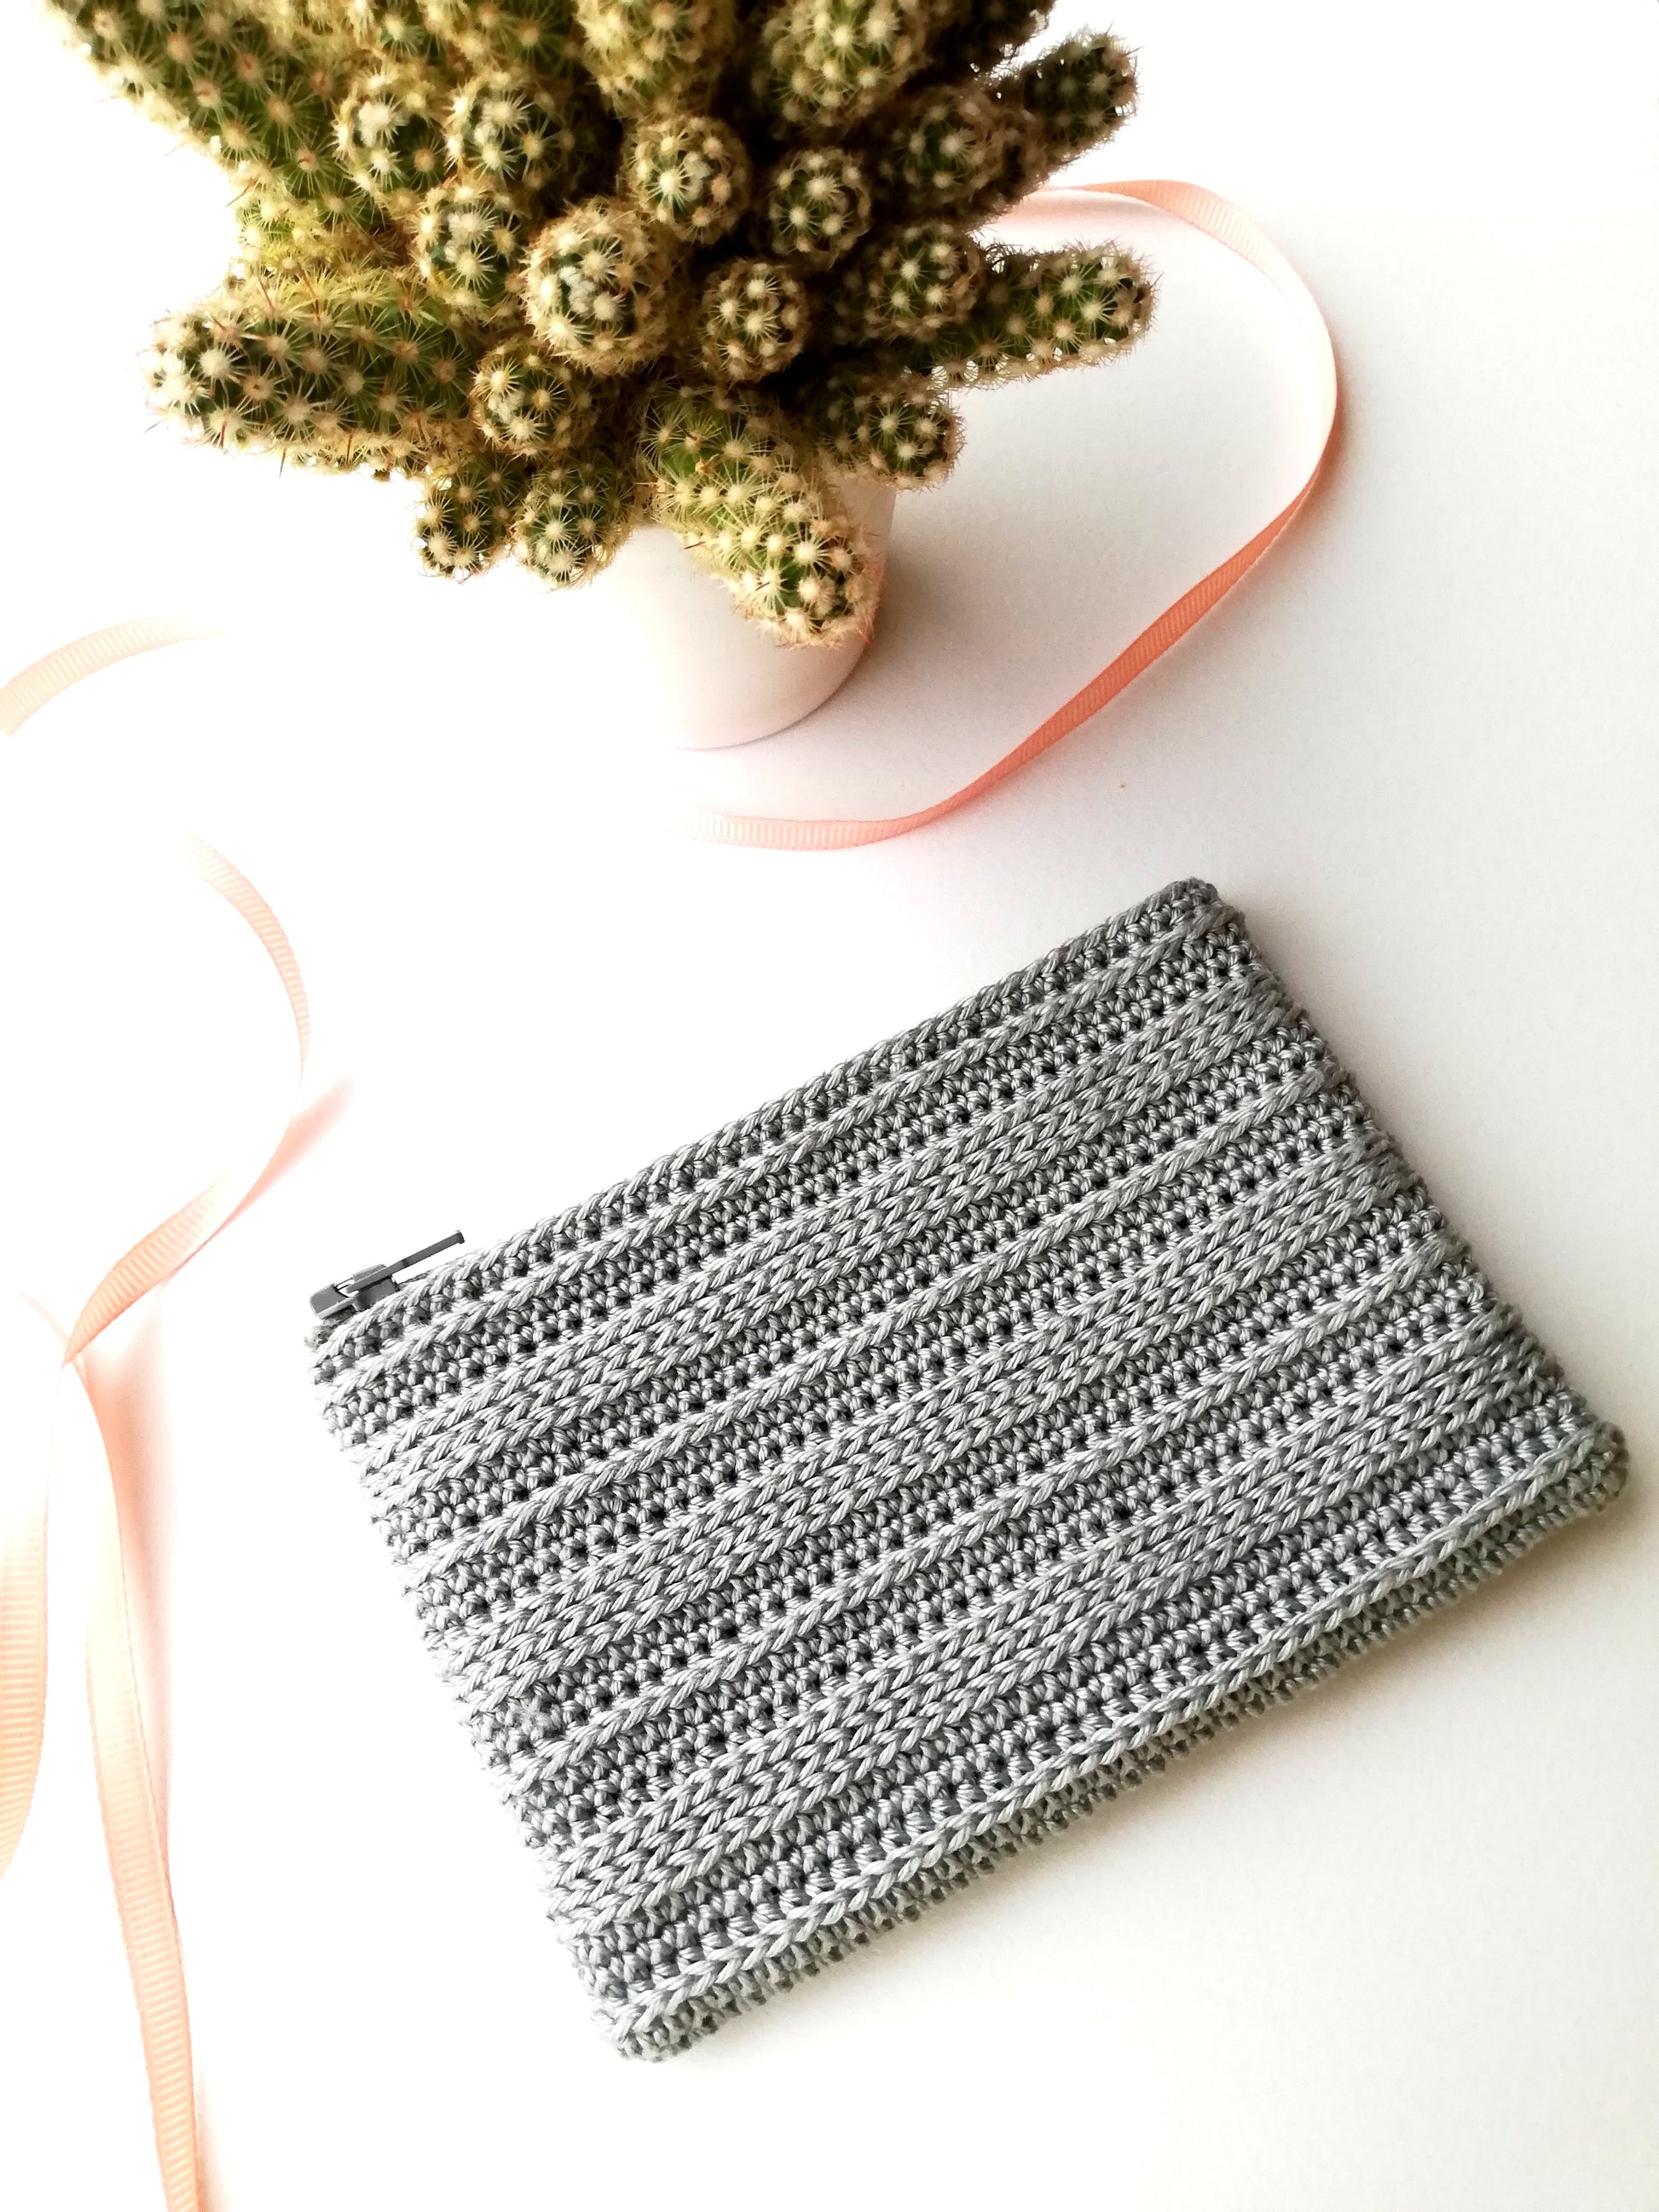 Crochet pattern: textured striped pouch